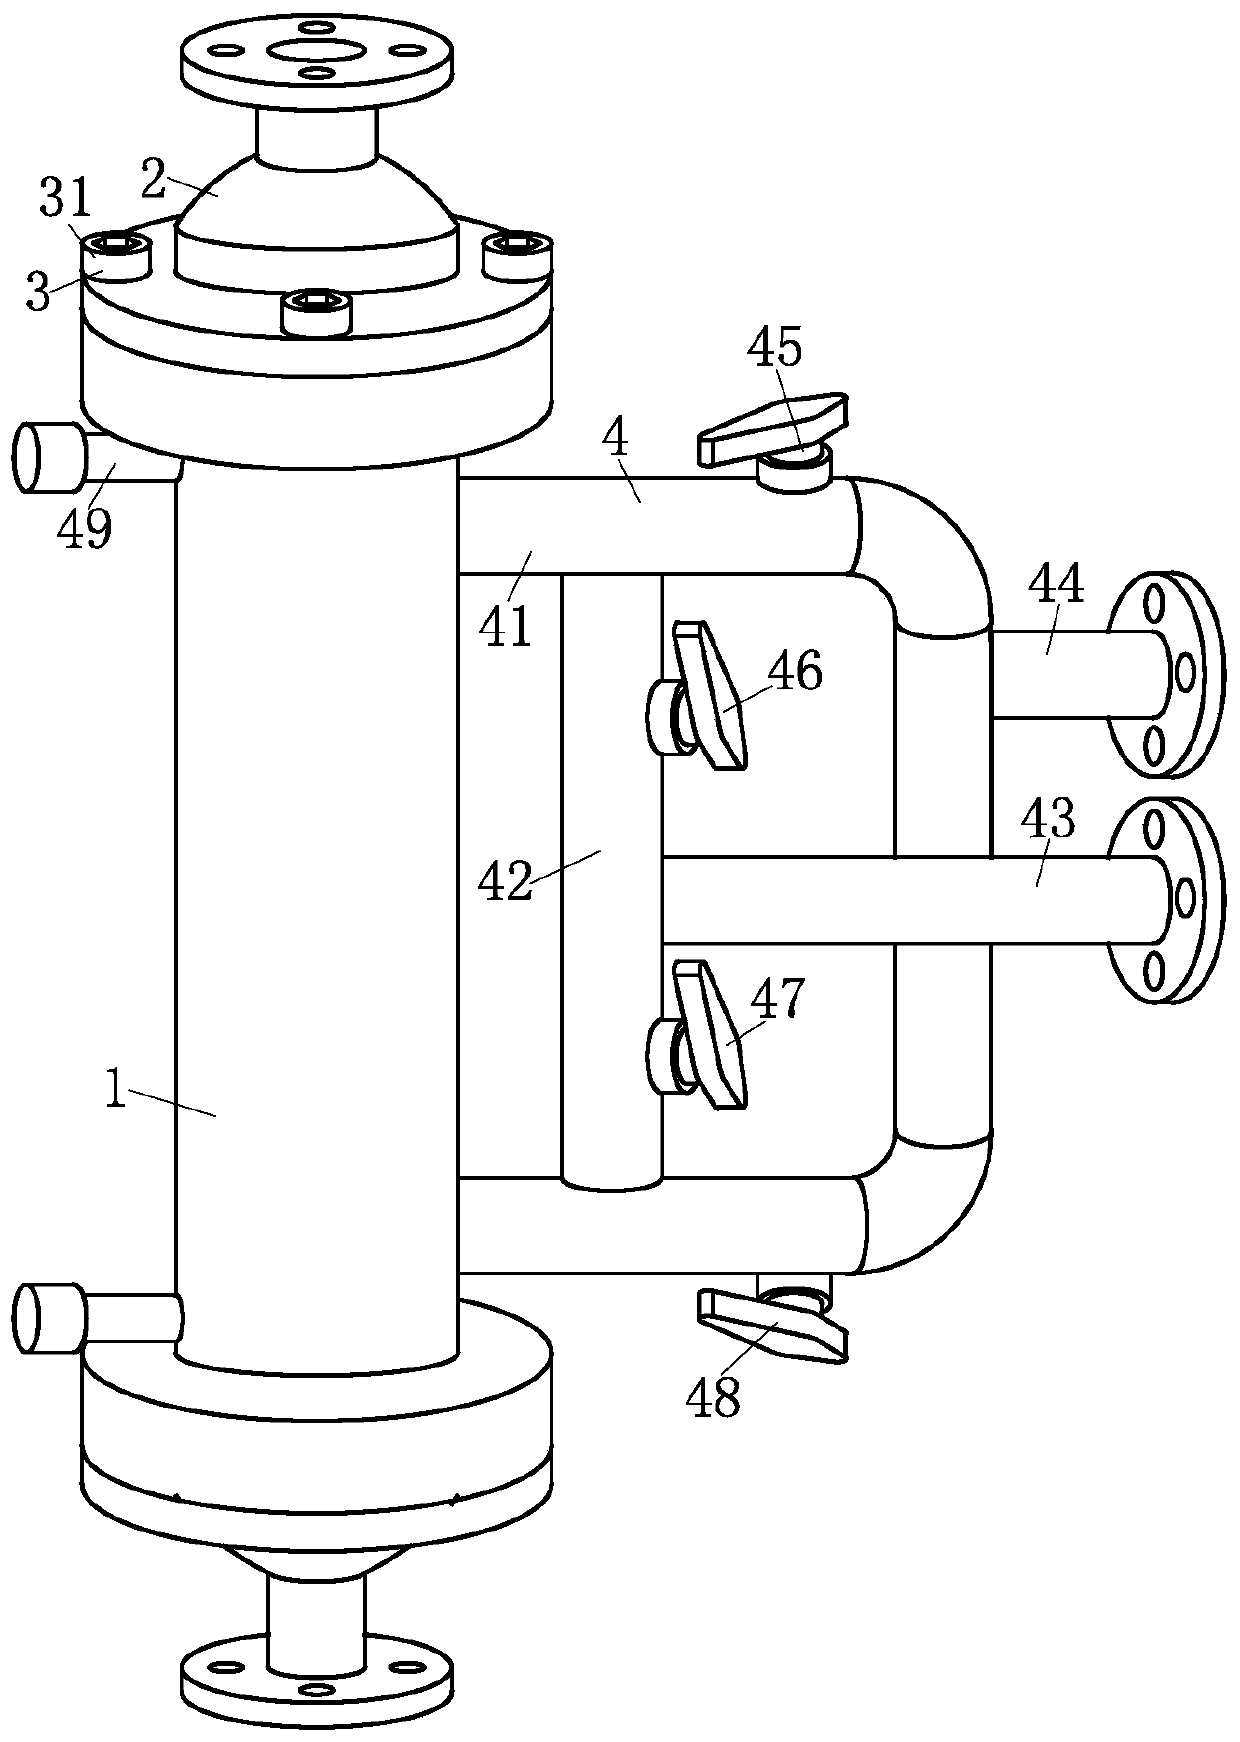 Heat exchange device for composite methyl alcohol evaporator